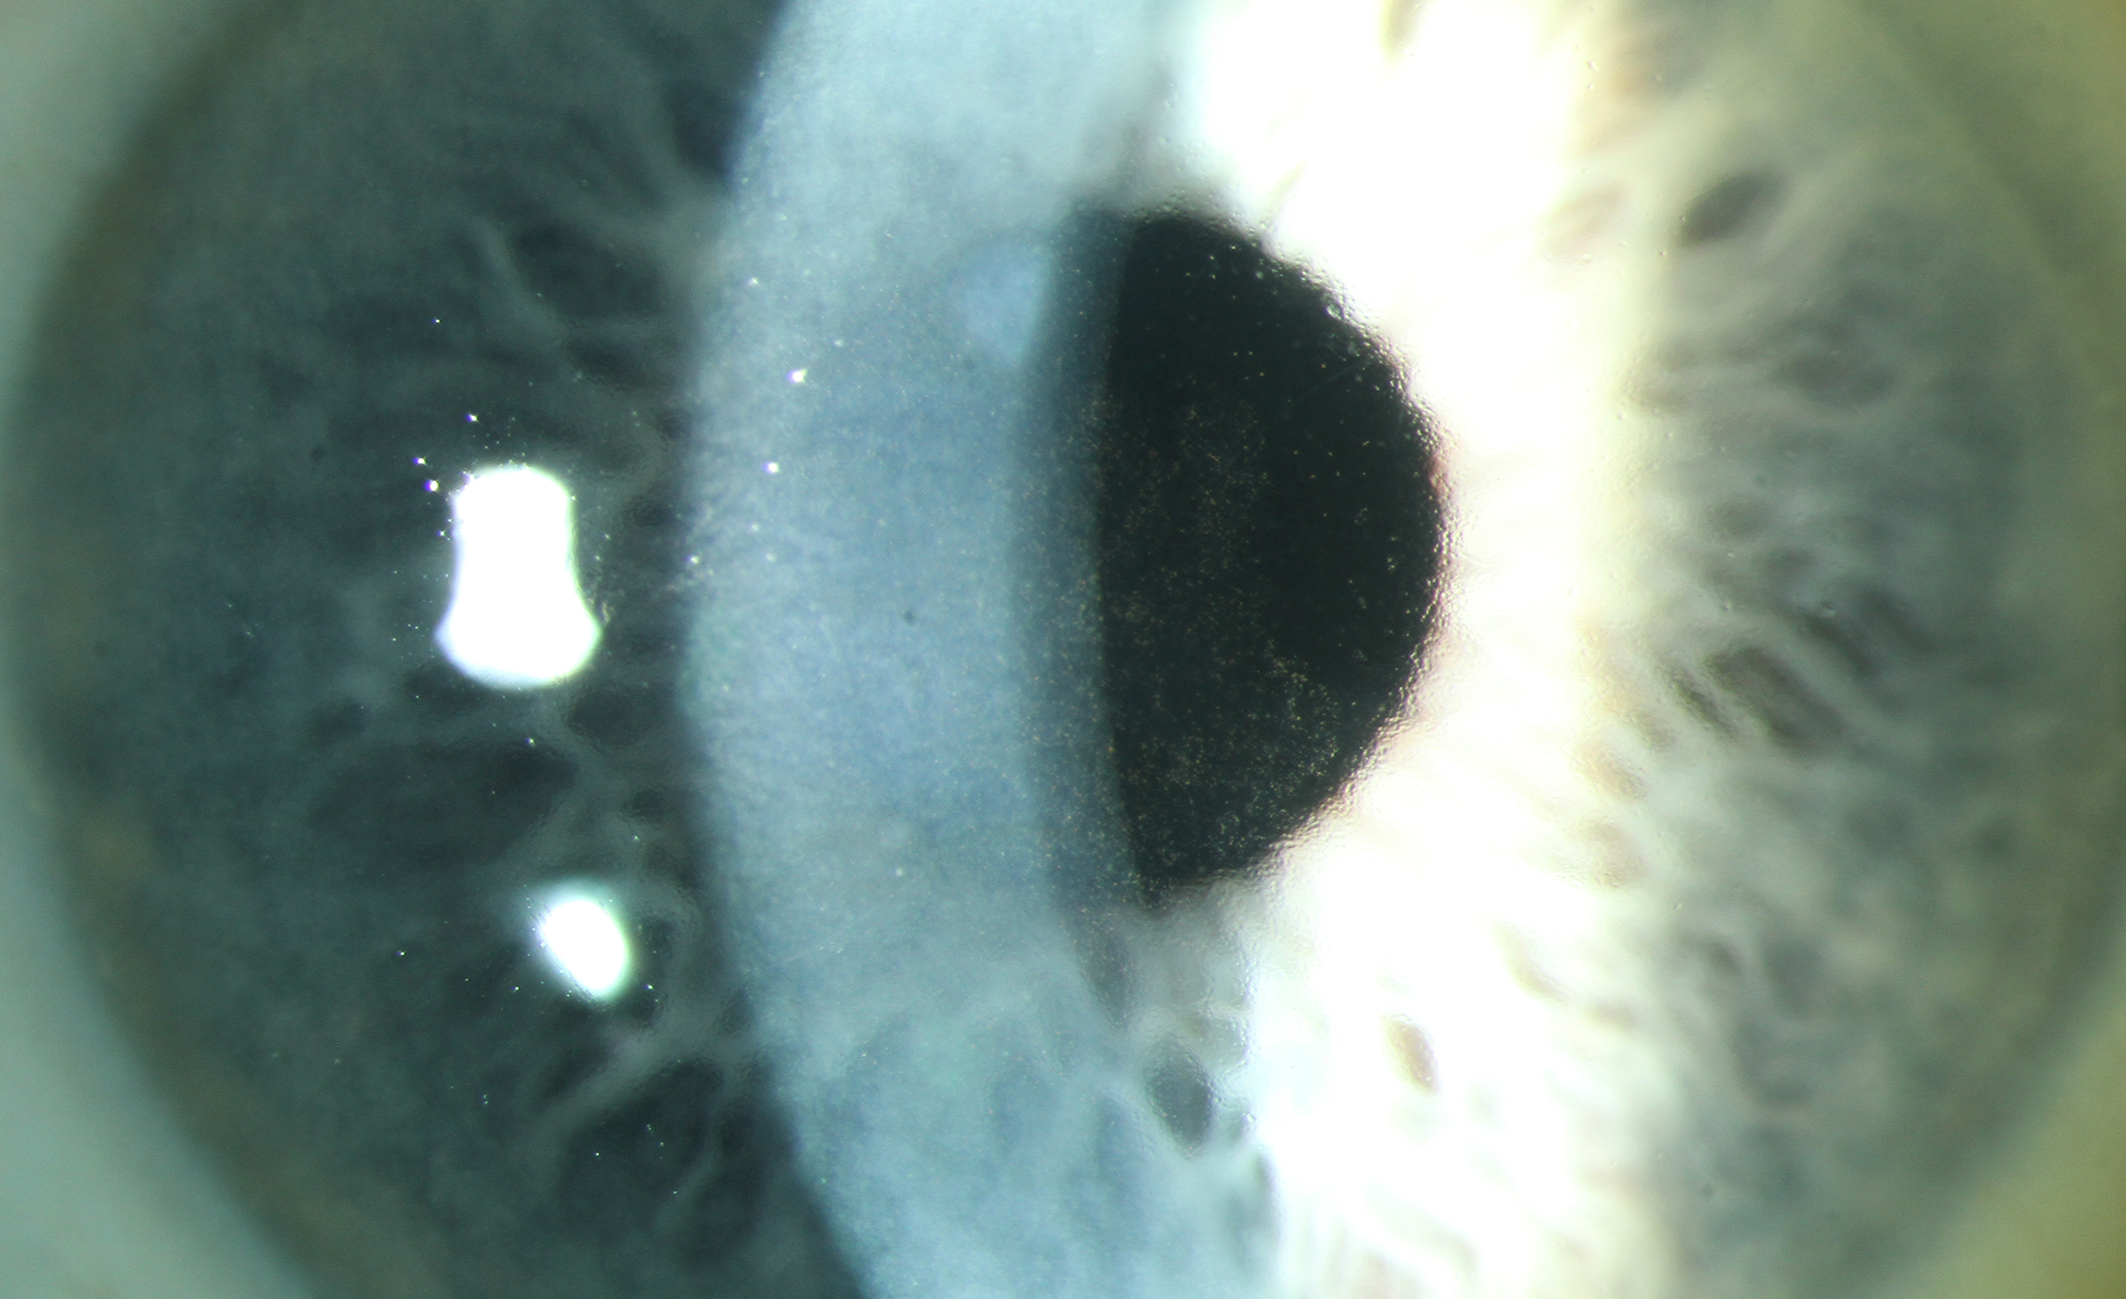 Fuchs corneal endothelial dystrophy